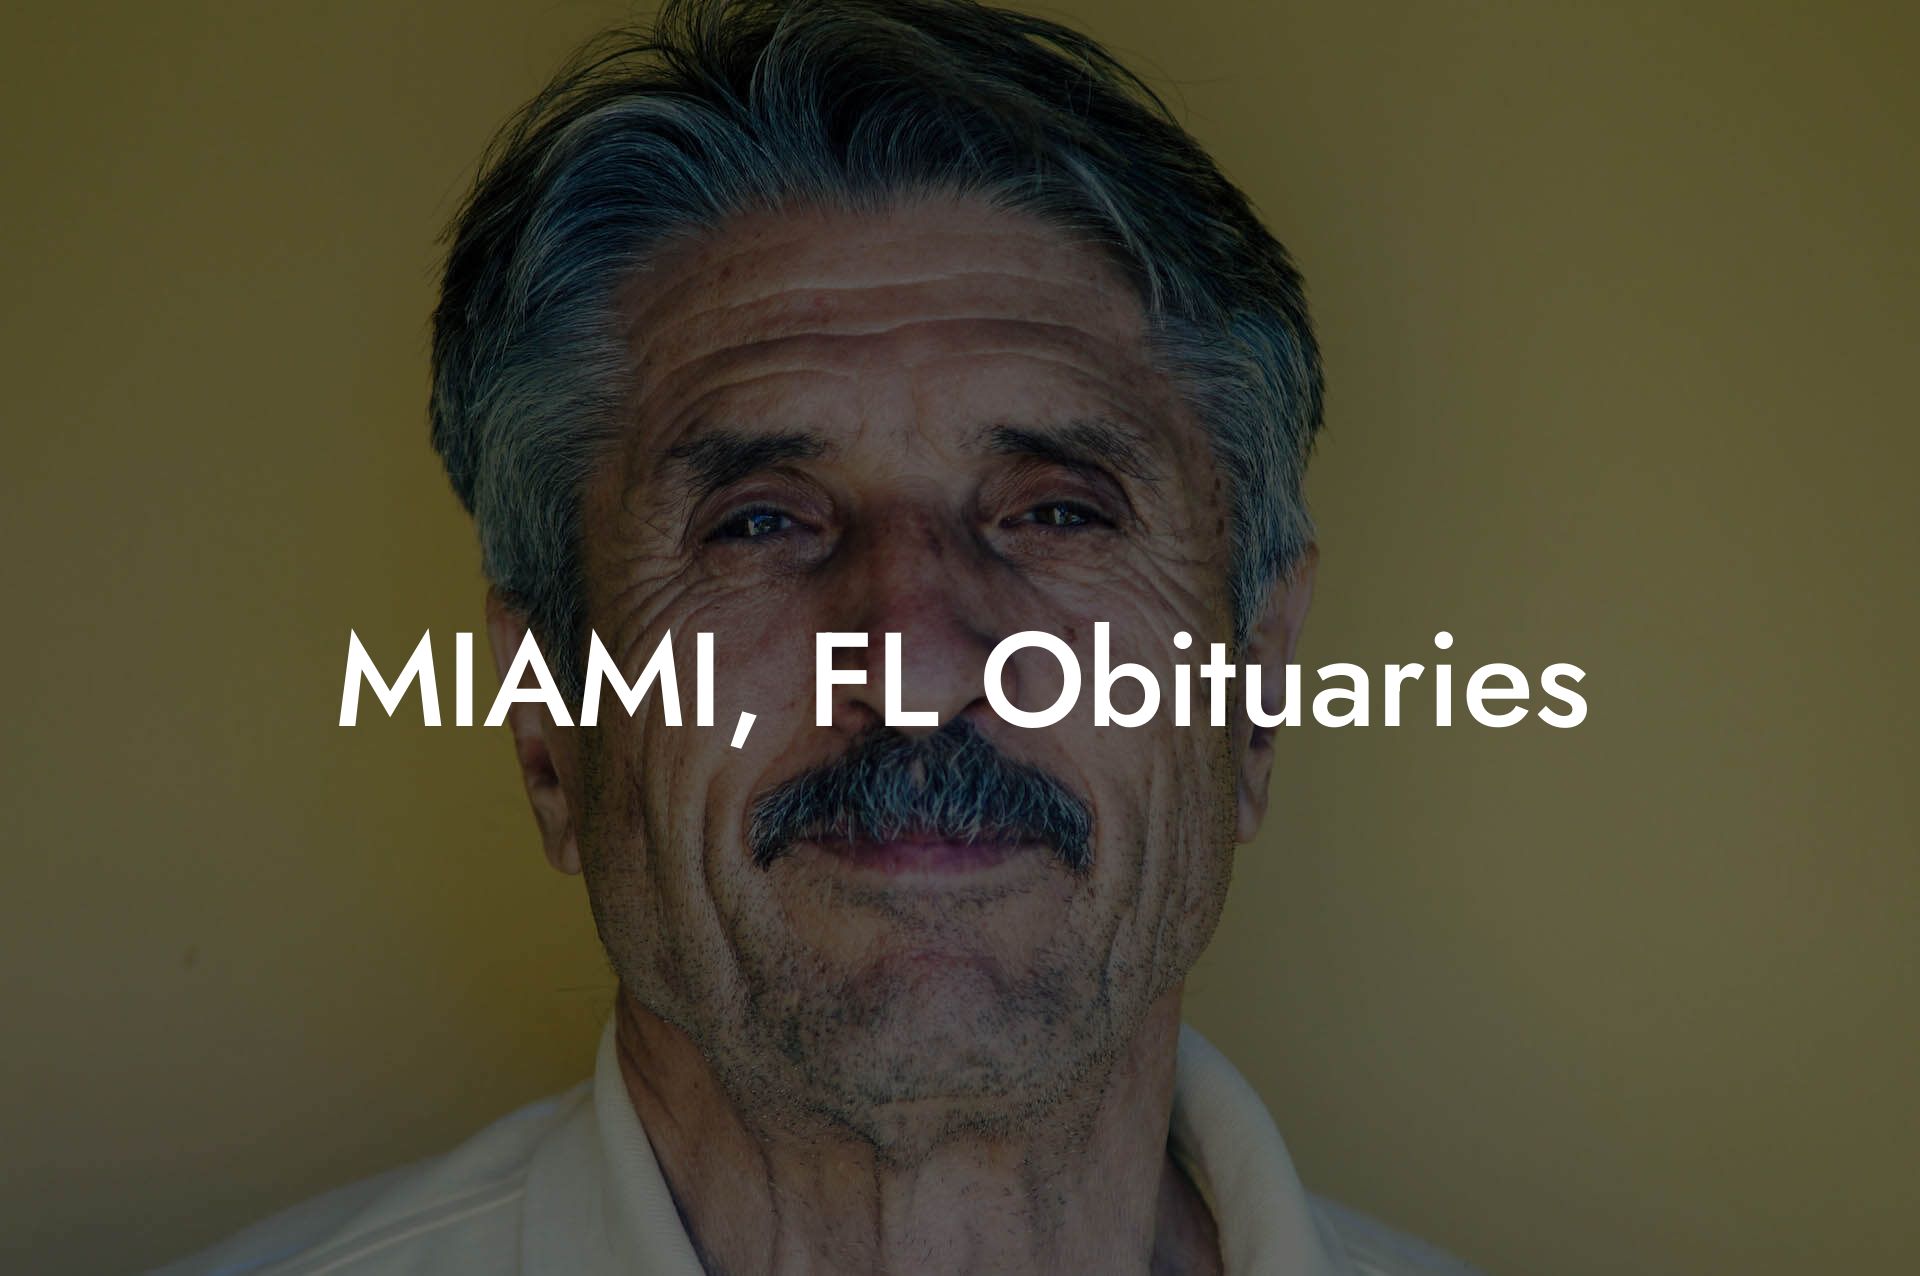 MIAMI, FL Obituaries